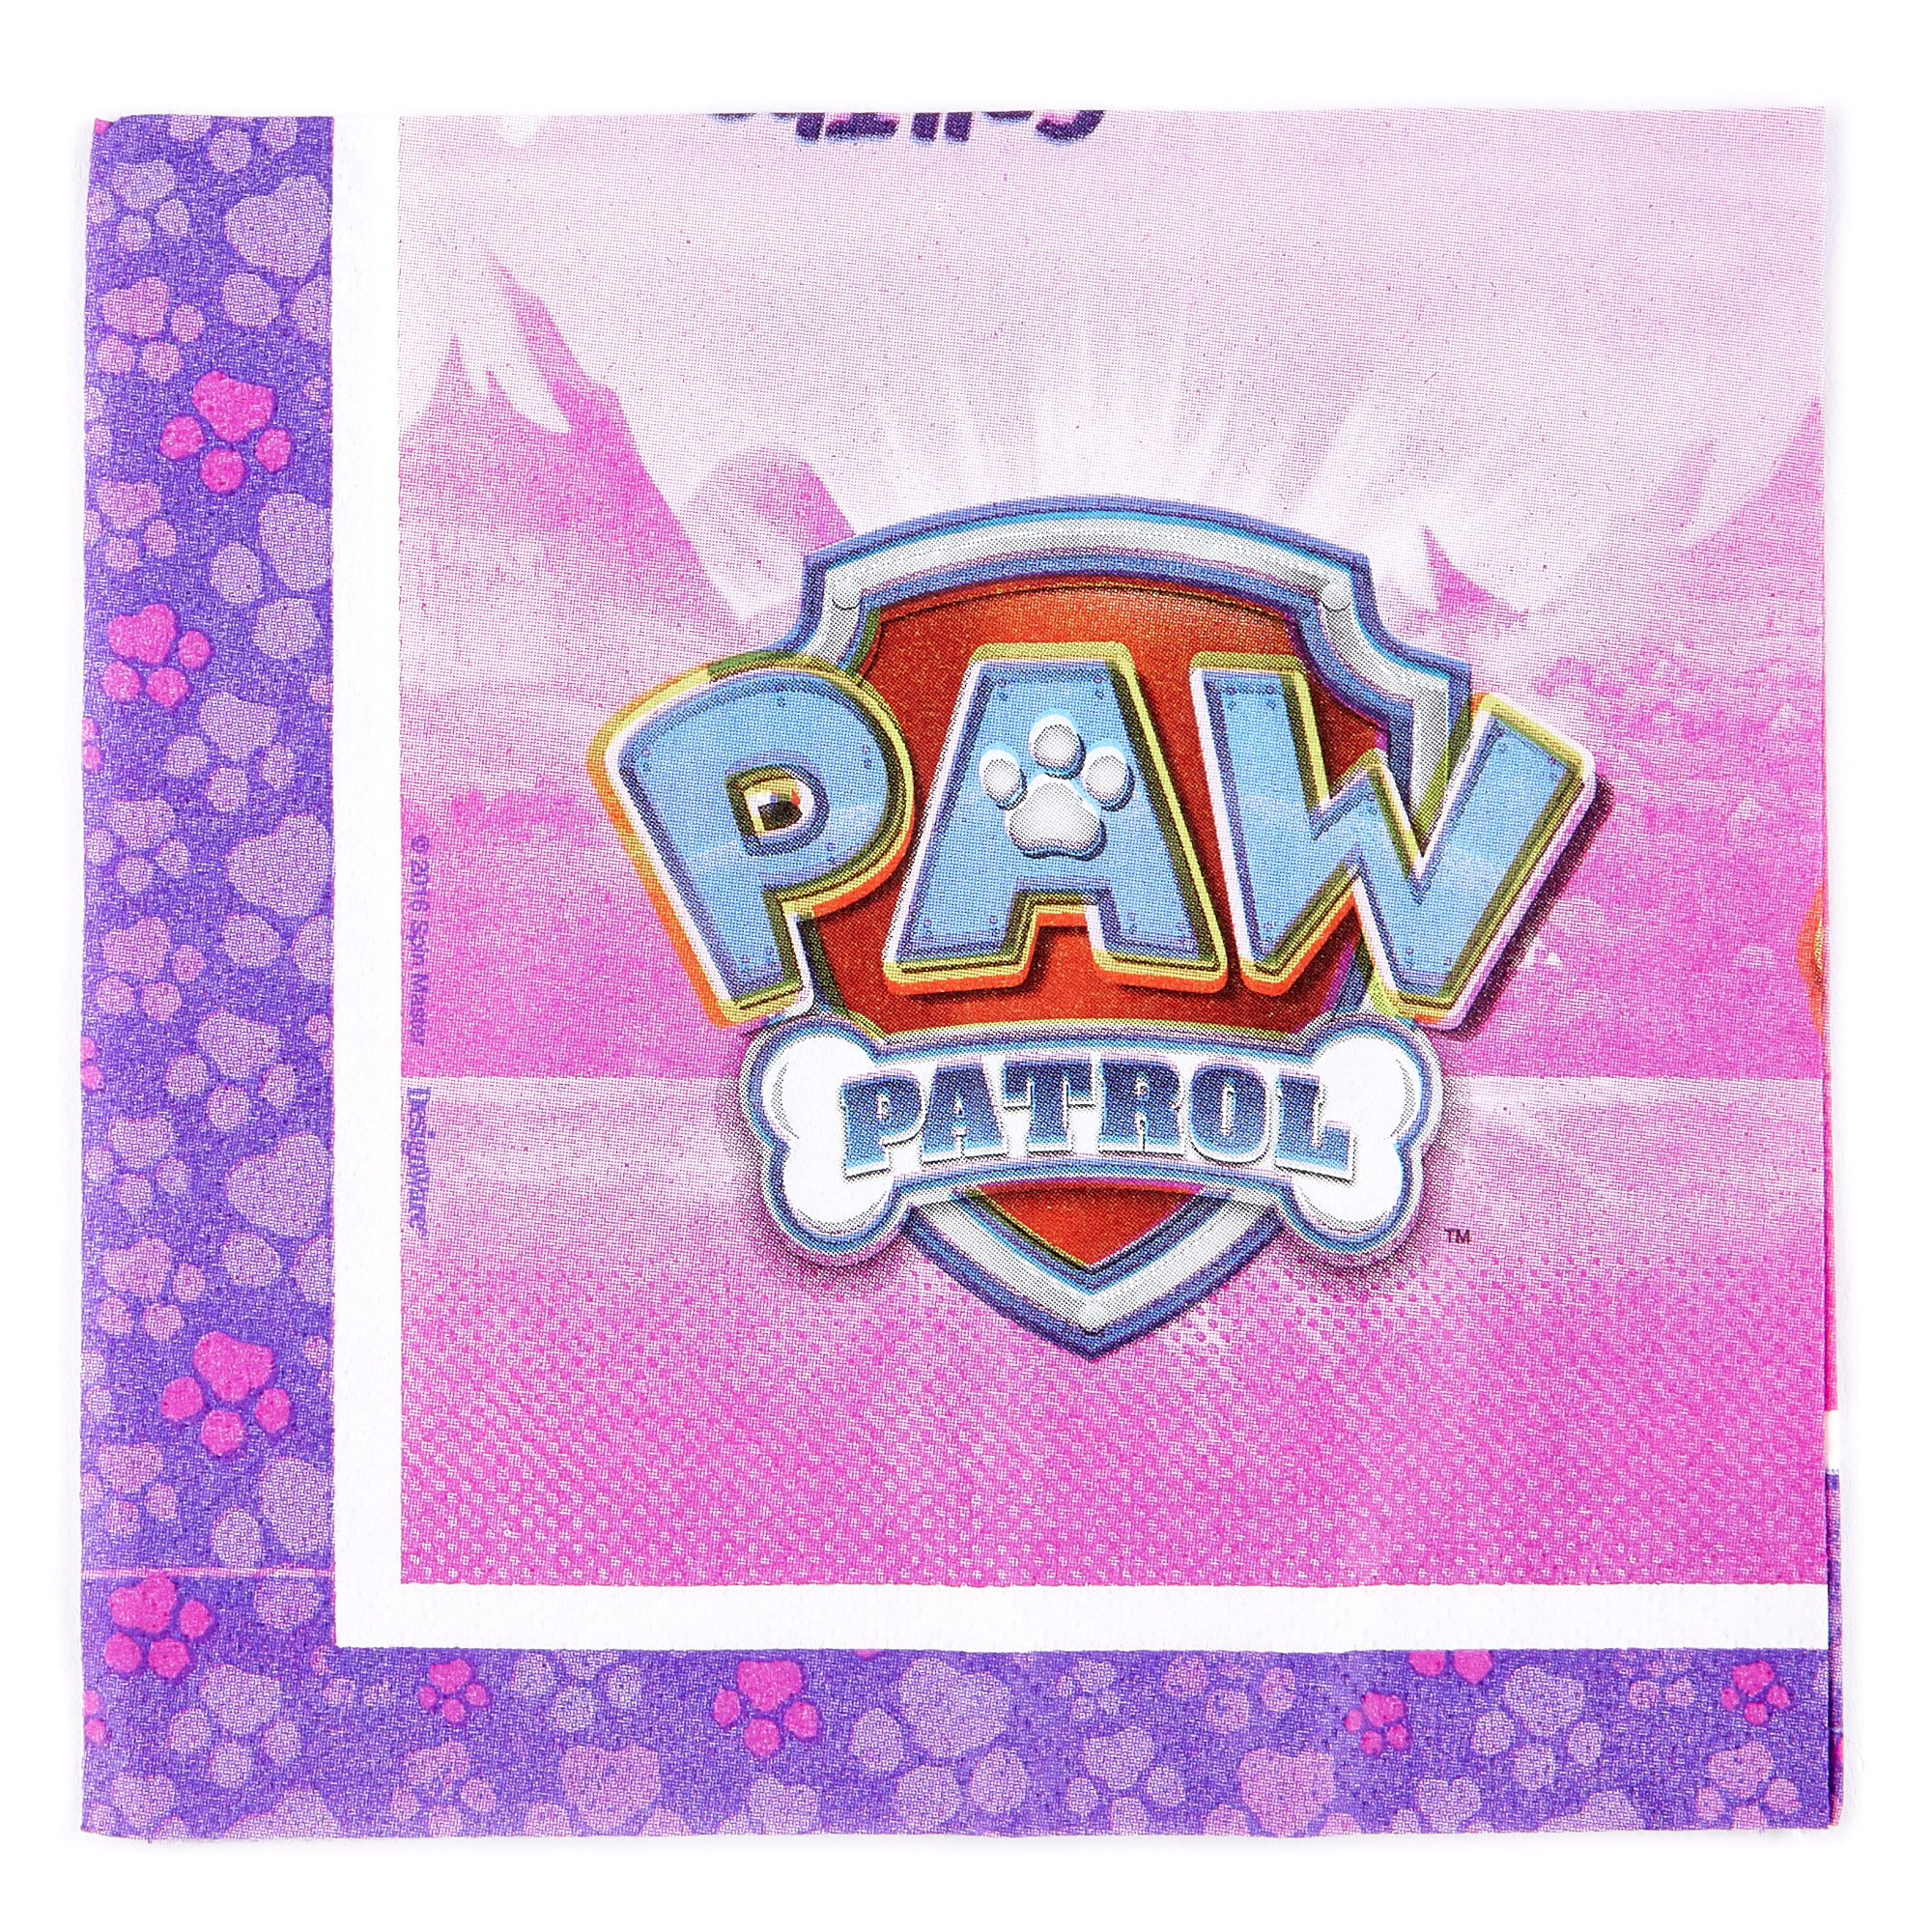 Pink Paw Patrol Party Tableware & Decorations Bundle - 16 Guests